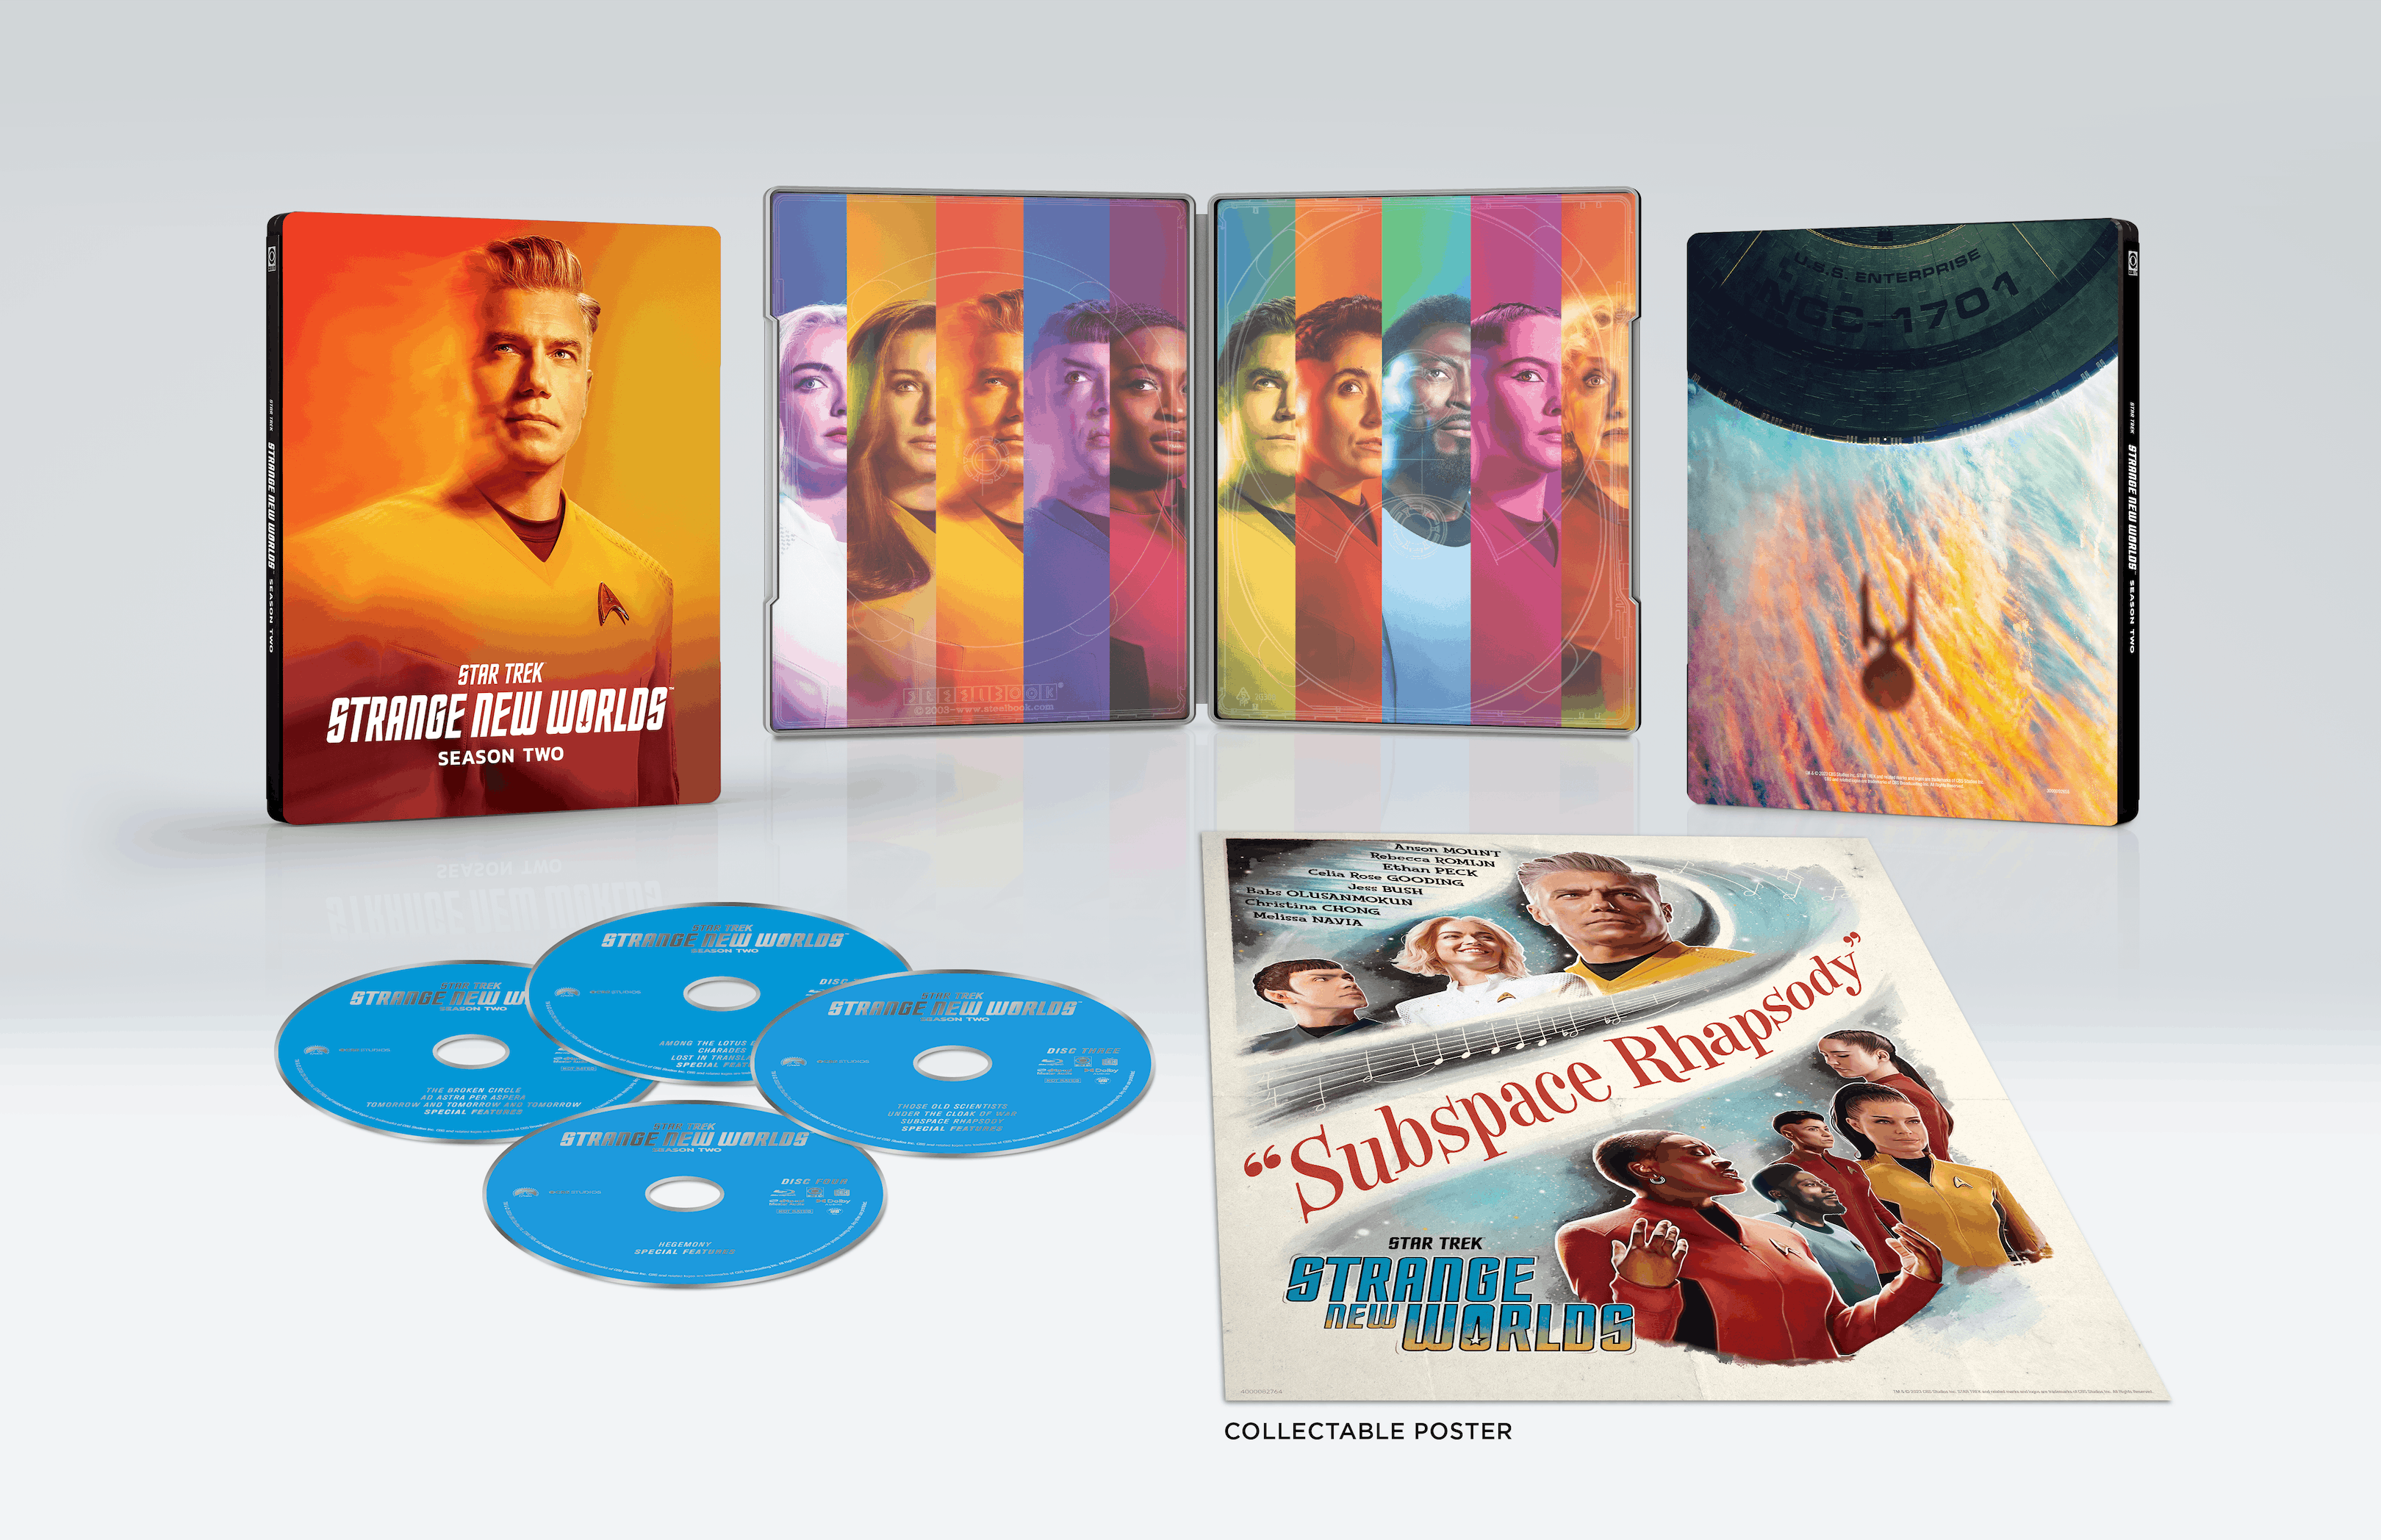 Star Trek: Strange New Worlds Season 2 - Blu-ray Steelbook pack shot with collectable poster